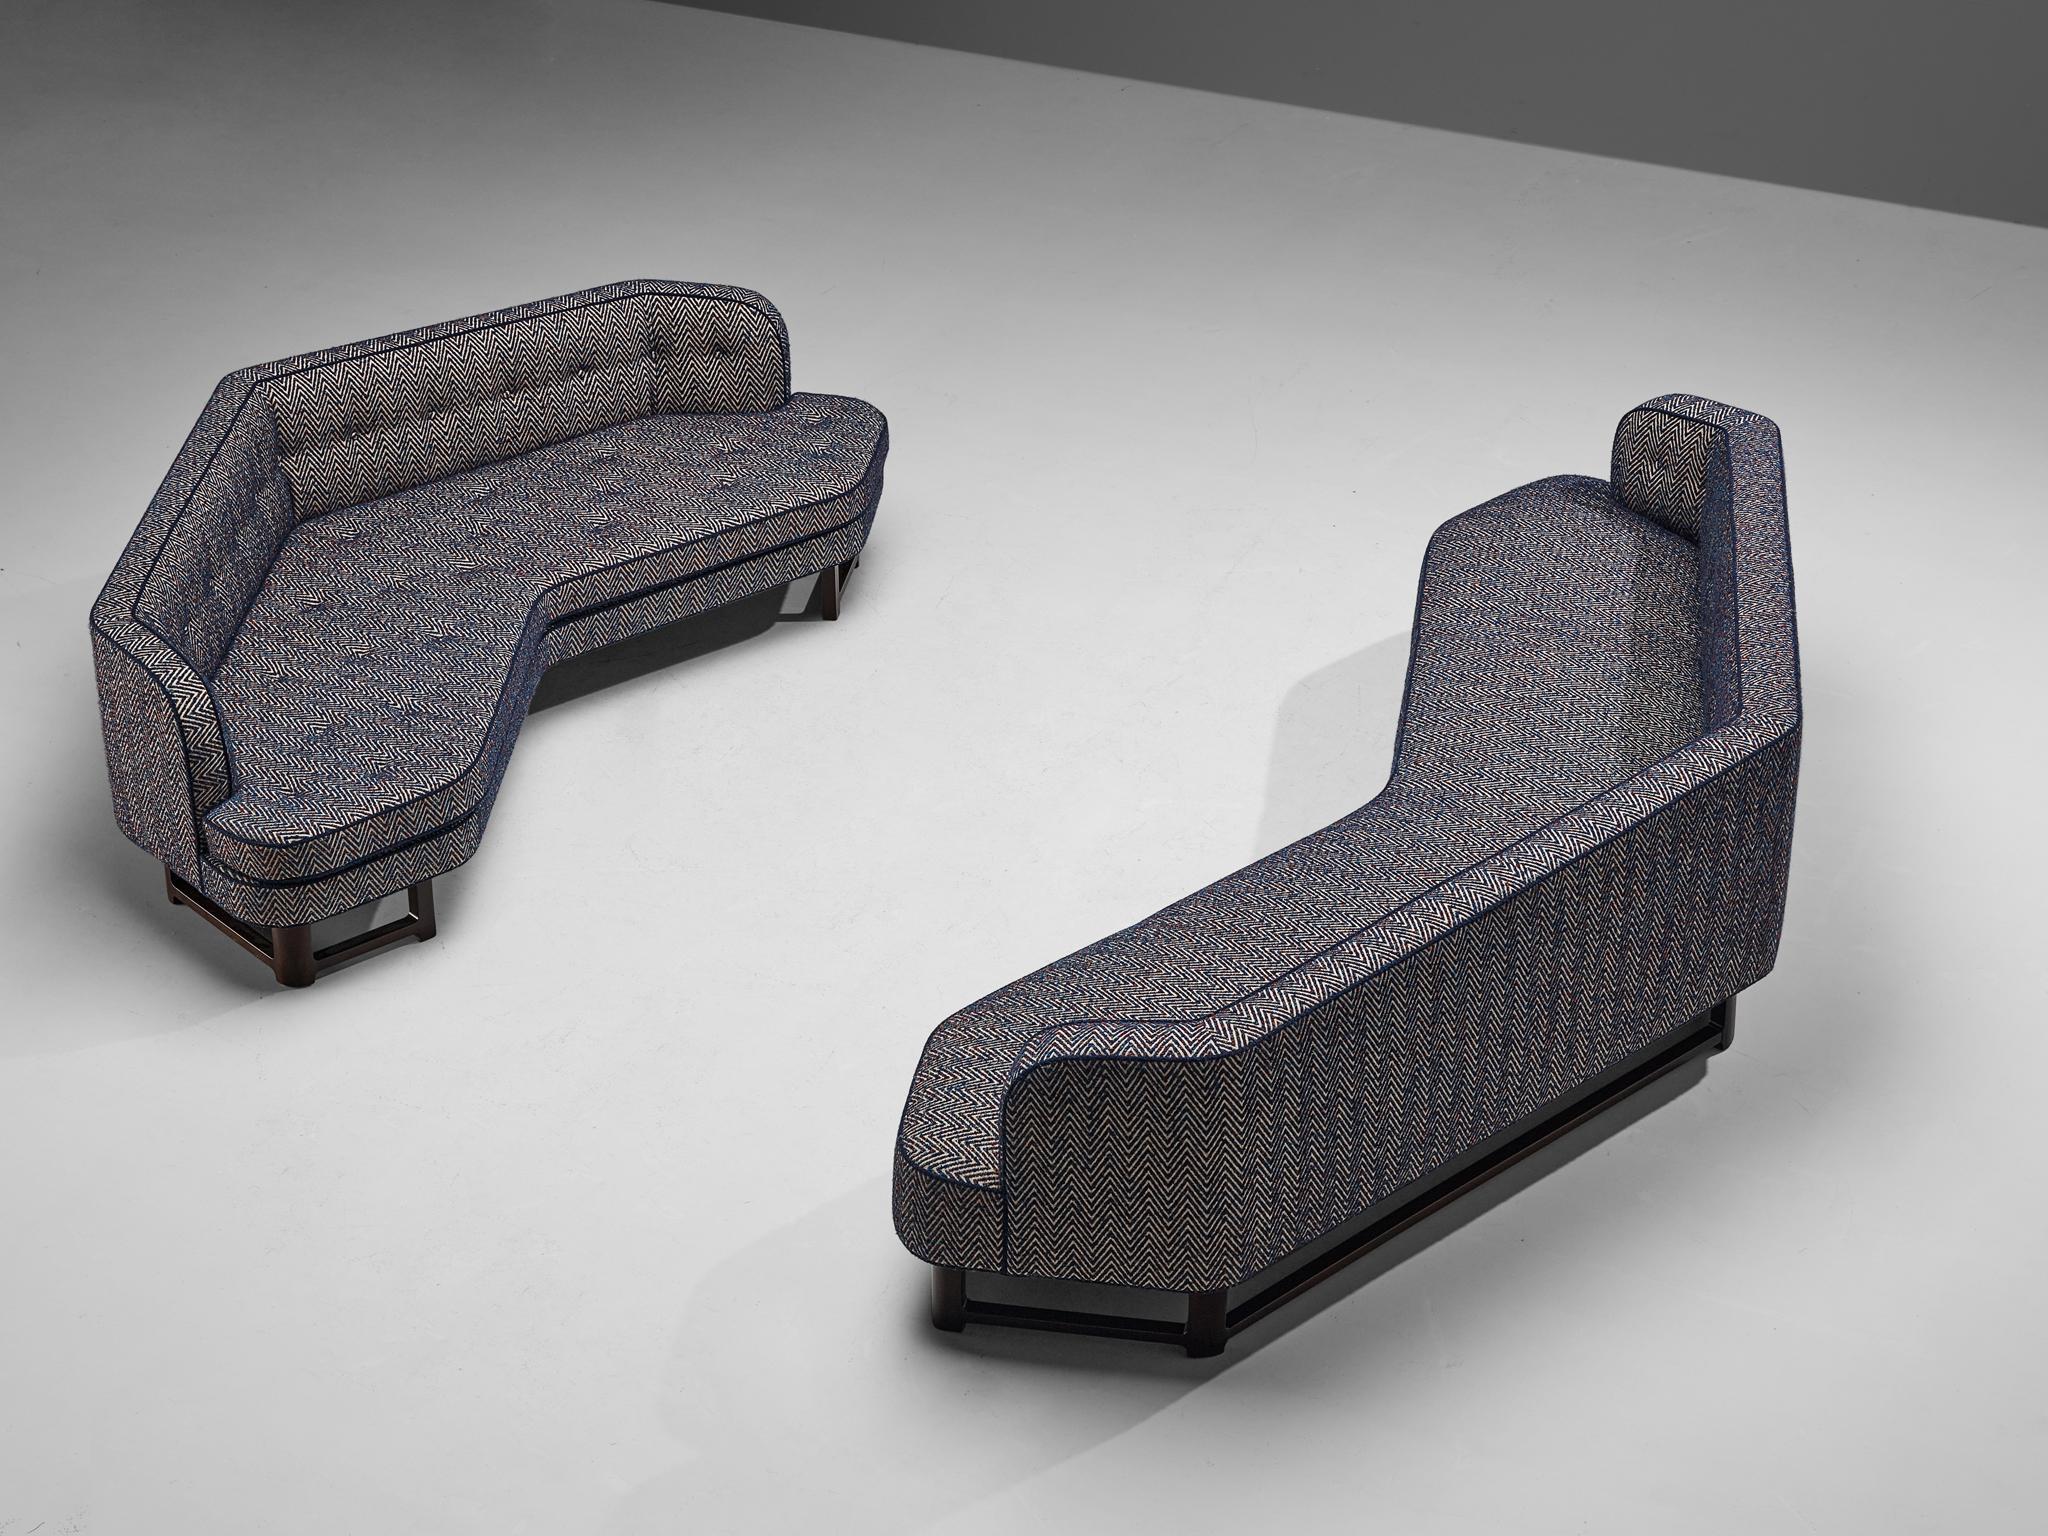 Edward Wormley Custom-Made 'Janus' Sofa in Multicolored Patterned Fabric  3